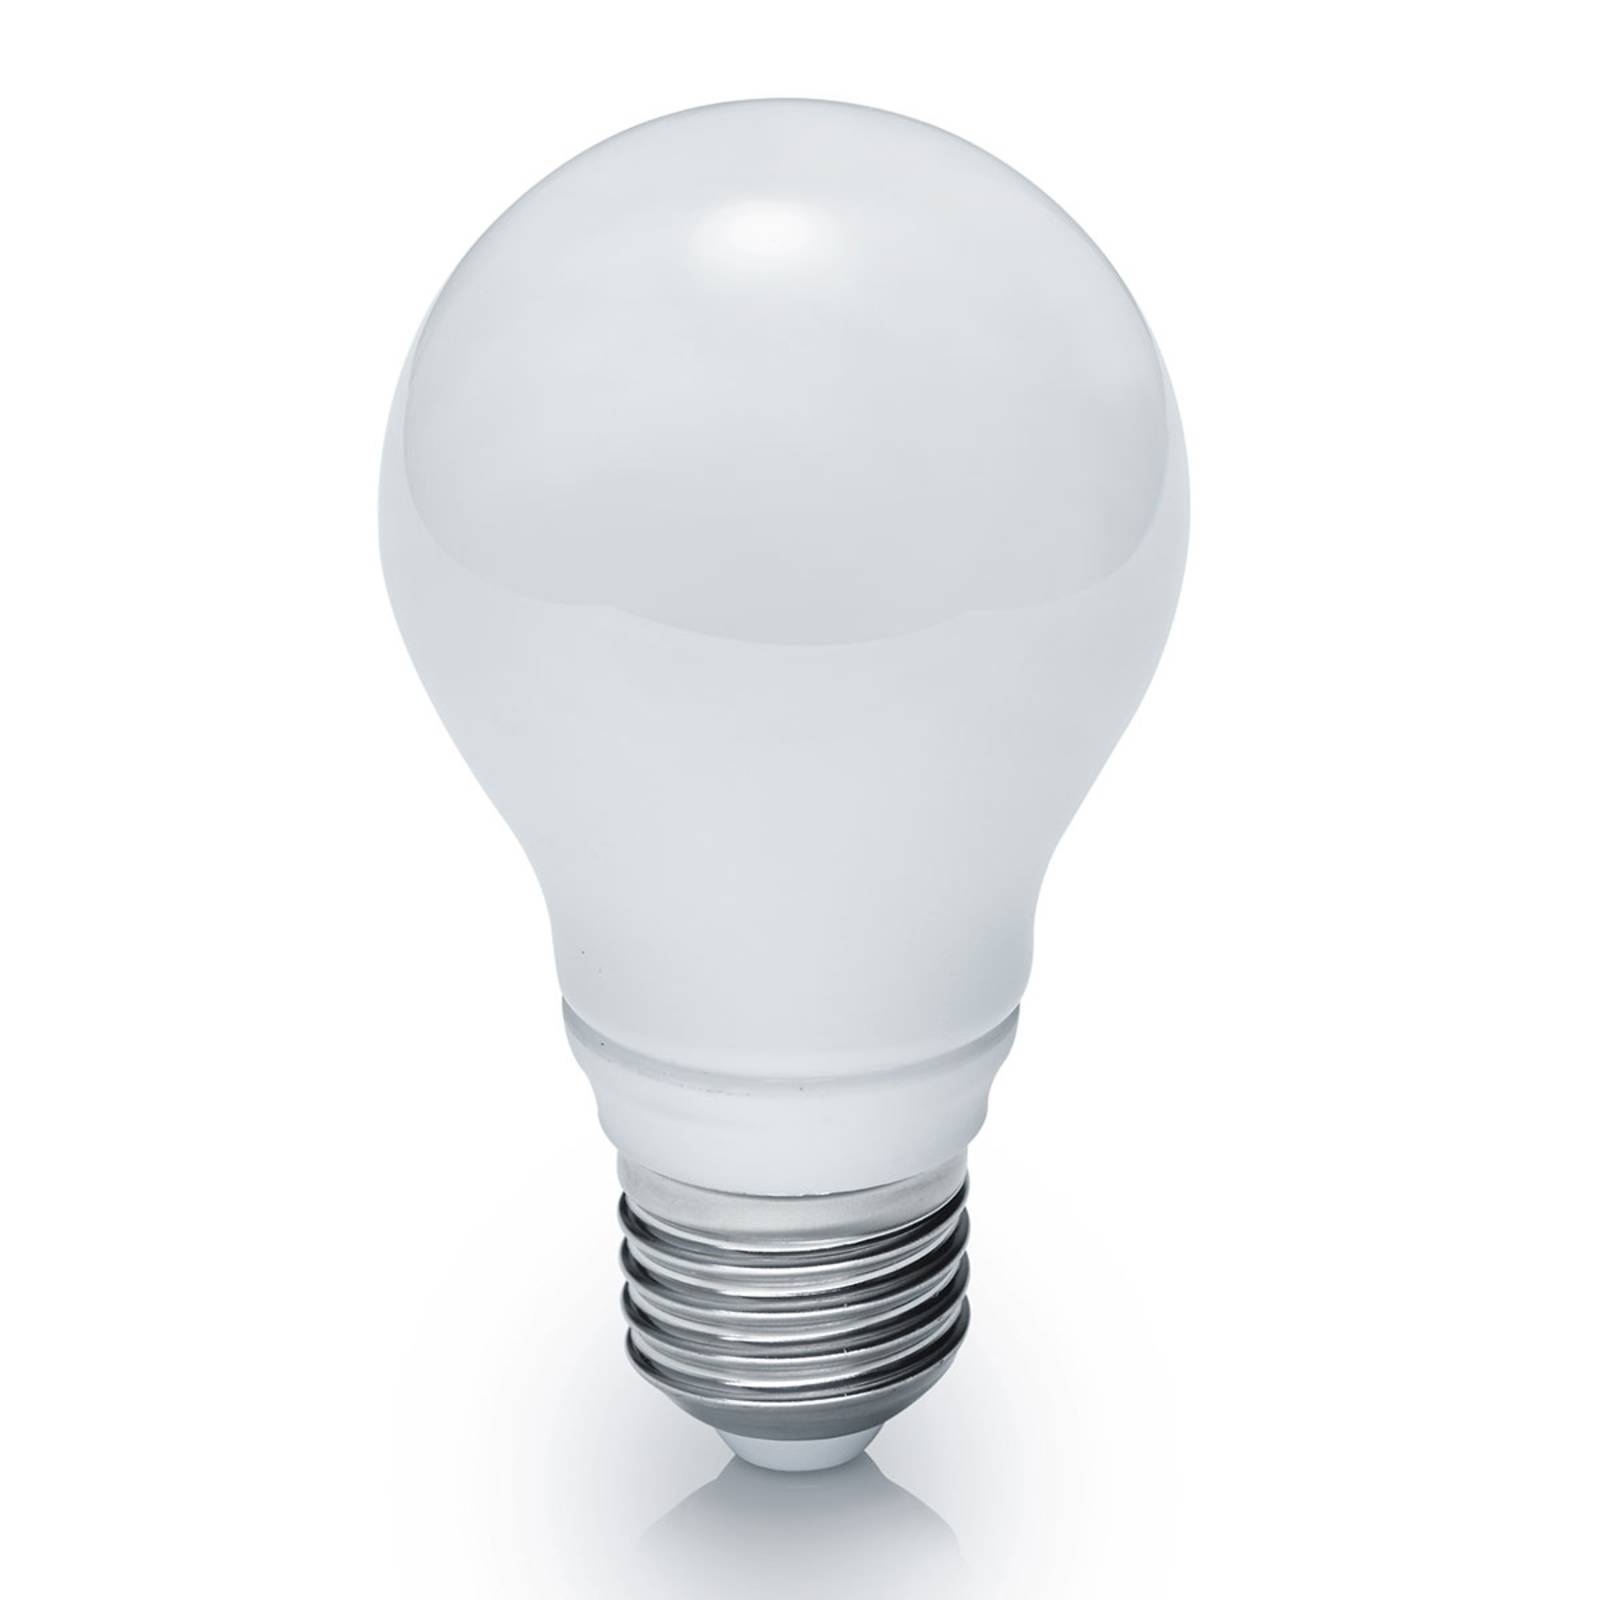 Trio Lighting LED-Lampe E27 10W dimmbar, Lichtfarbe warmweiß